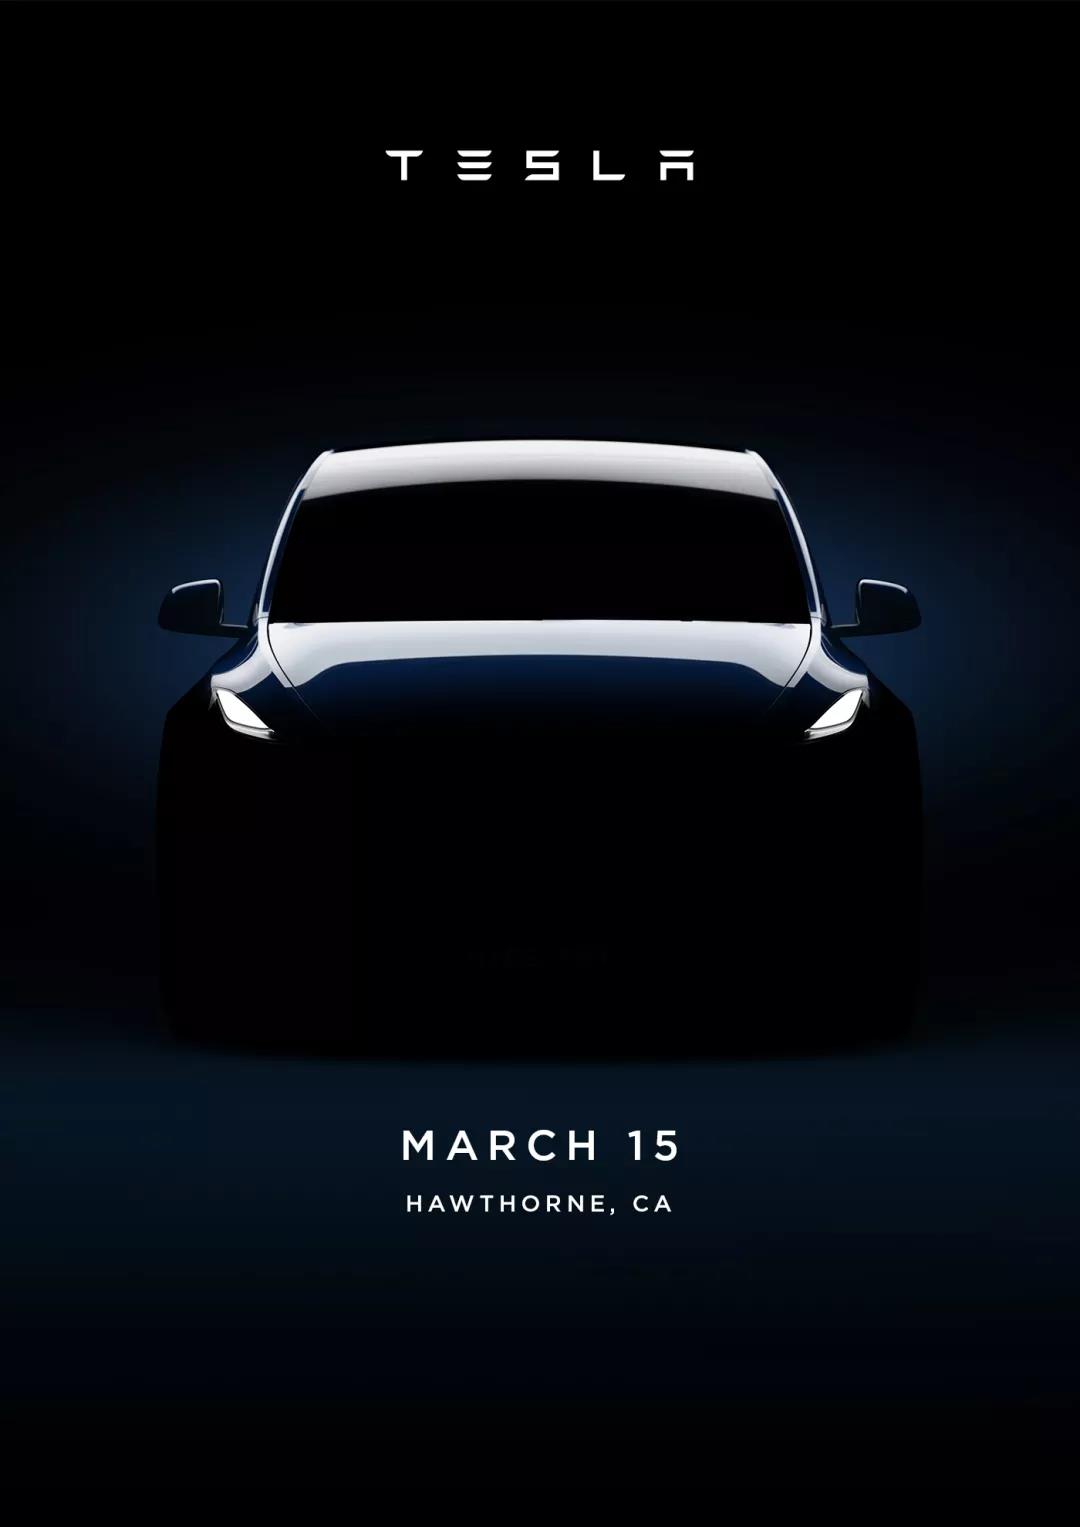 EV早报|中国海关解除对特斯拉Model 3的暂停放行；2月新能源乘用车销量榜单出炉；FF出售美国工厂土地......